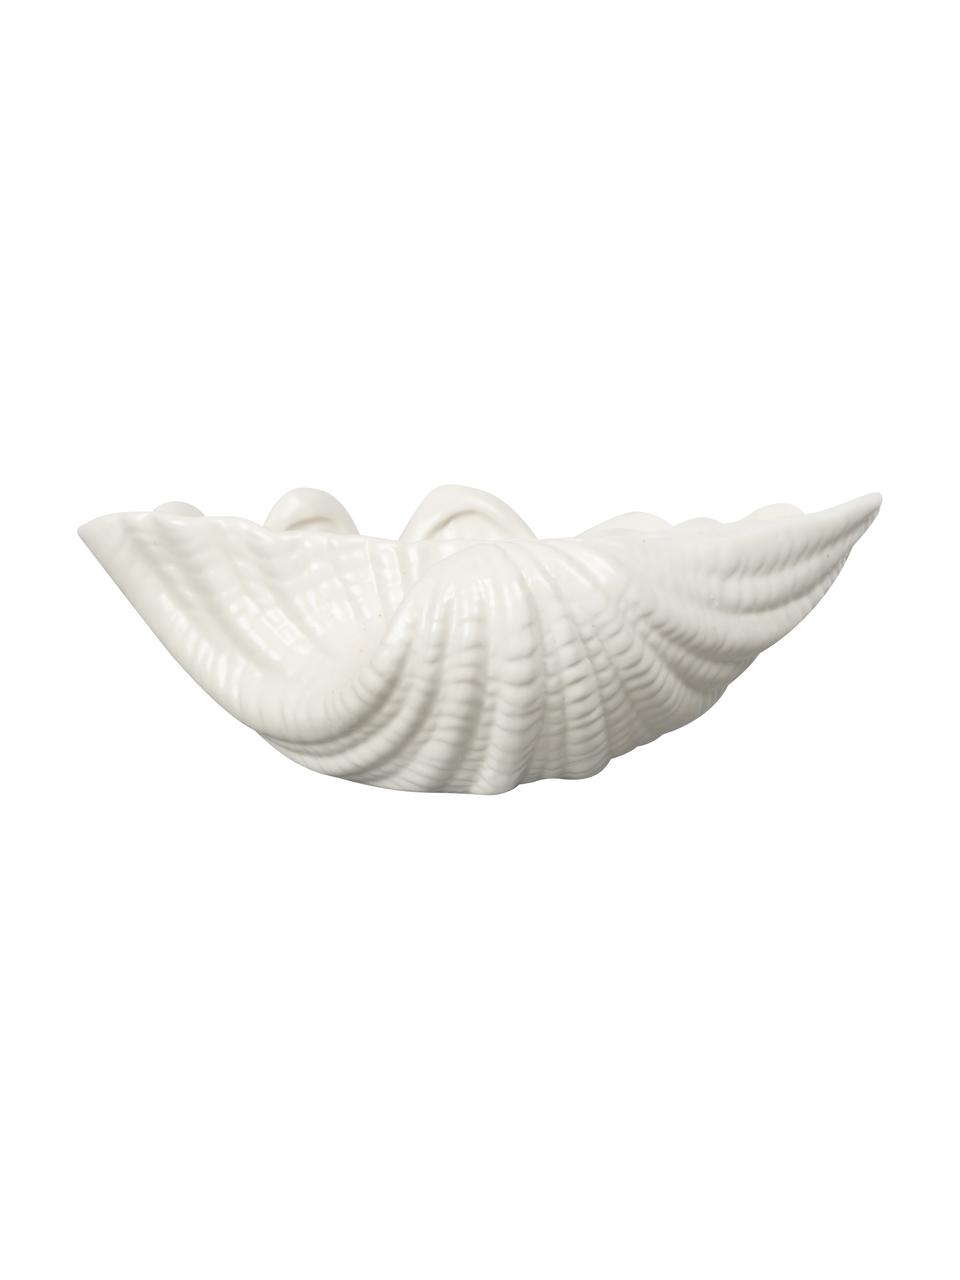 Coupelle en dolomie blanche Shell, larg. 24 cm, Dolomie, Blanc, larg. 23 x haut. 8 cm